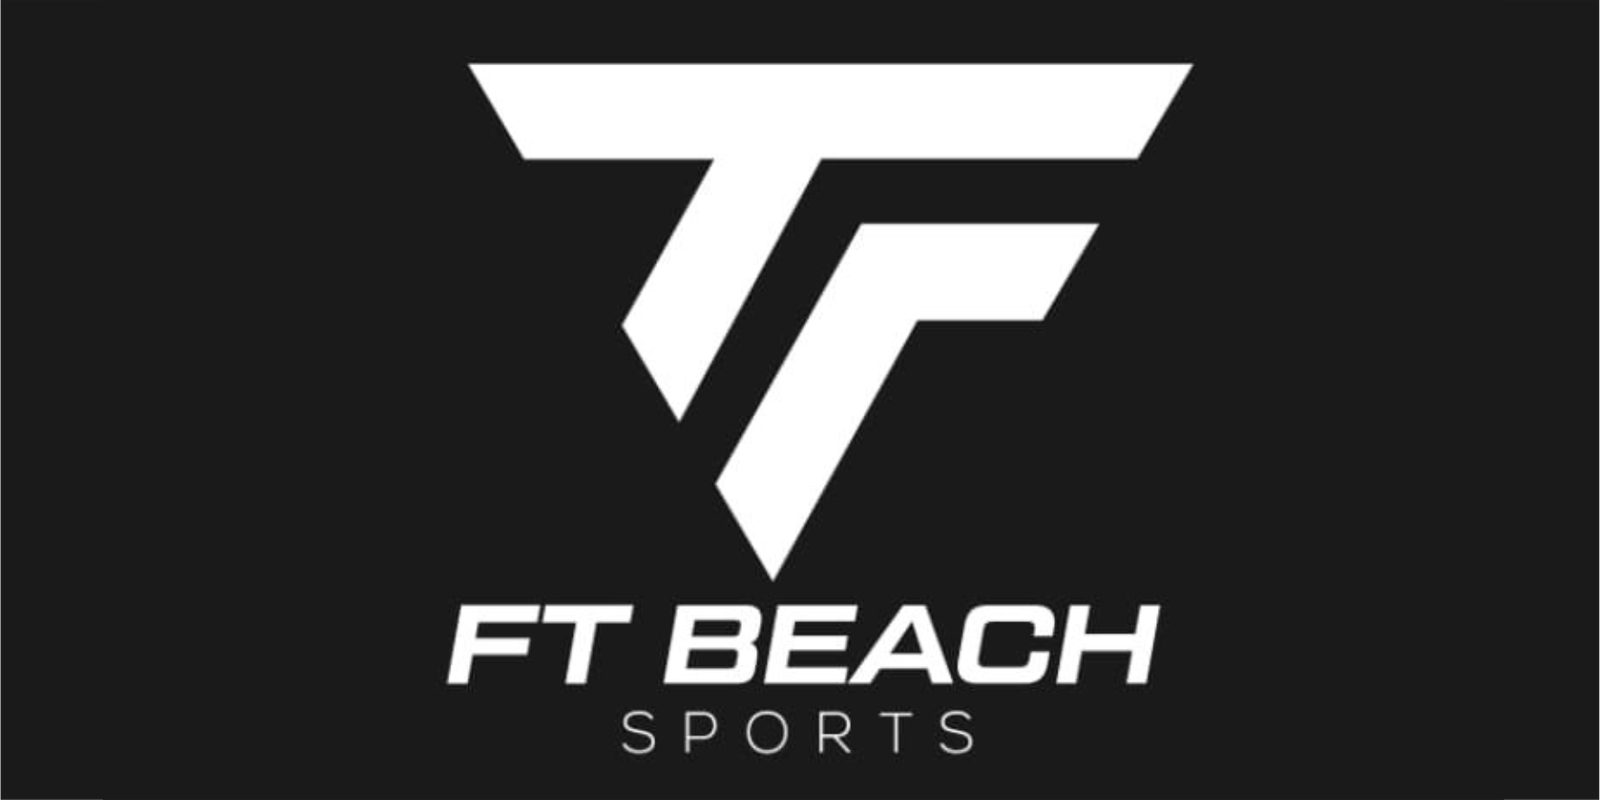 BT BEACH Sports